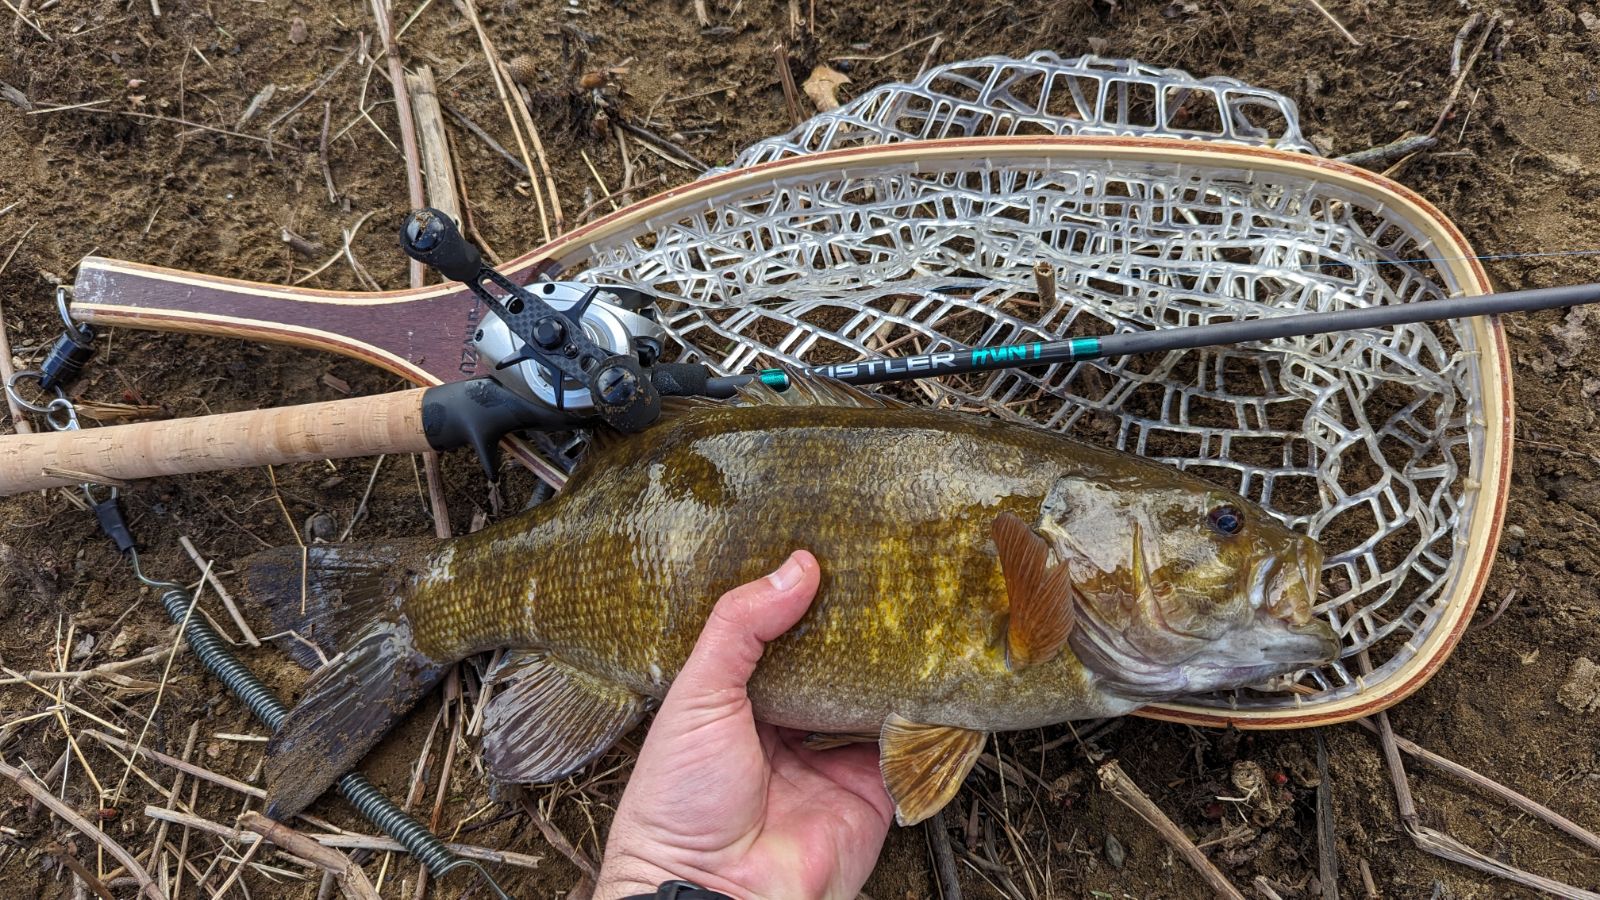 Men say Bass Pro fishing rod sale was deceptive